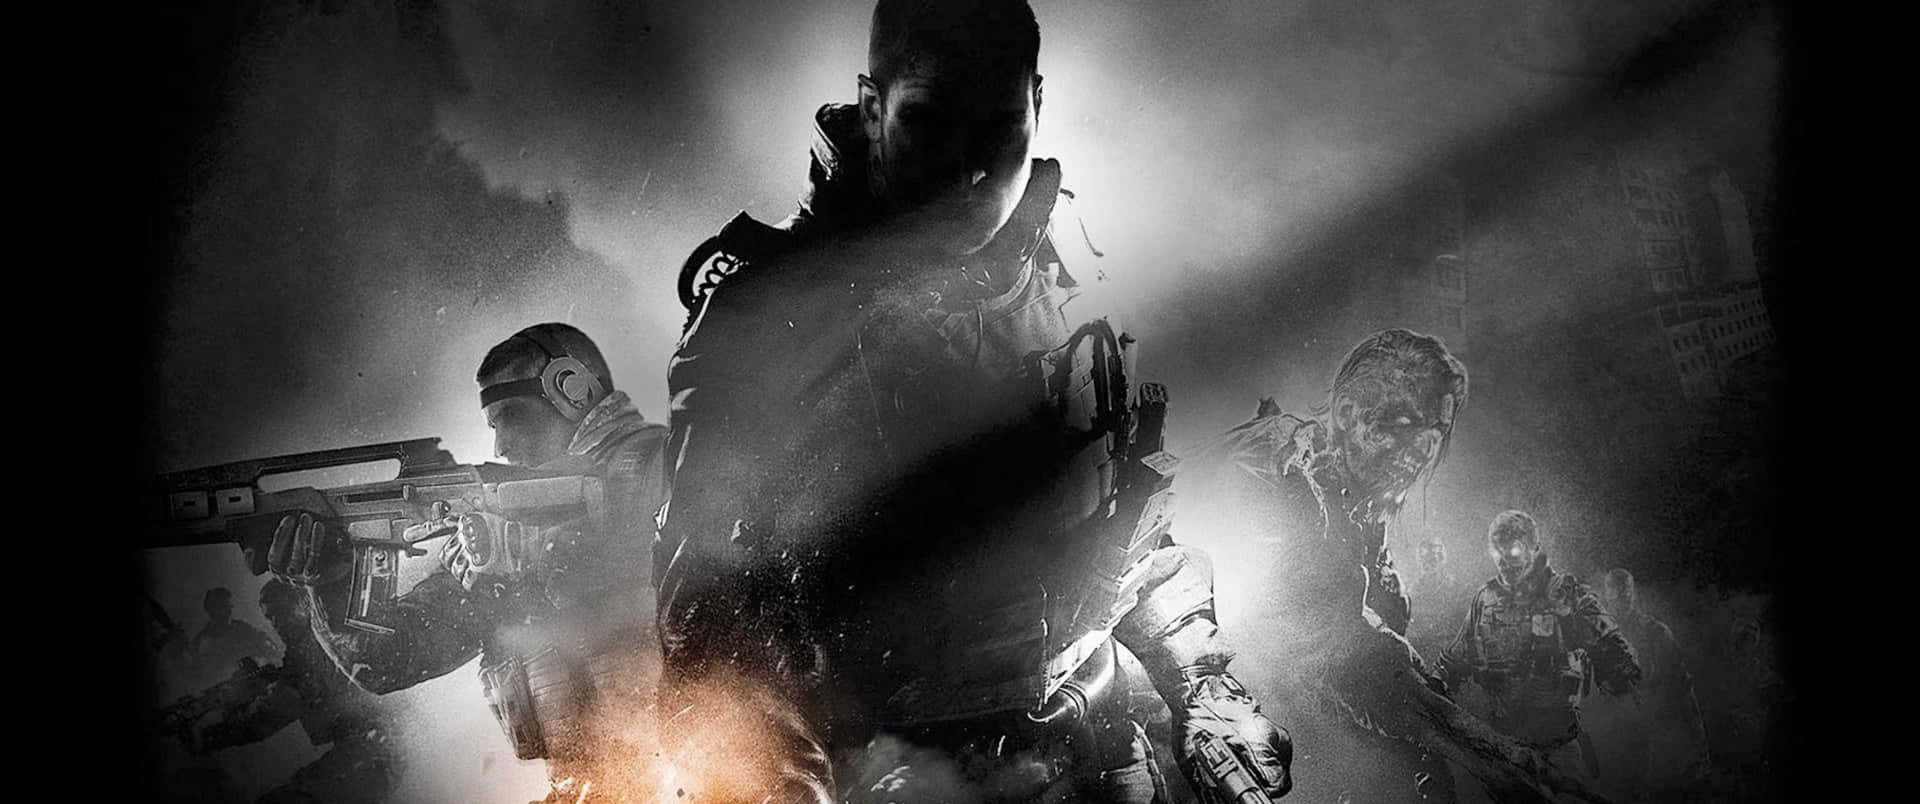 Enfréntateal Enemigo Con Armamento Avanzado En Call Of Duty Black Ops 4.